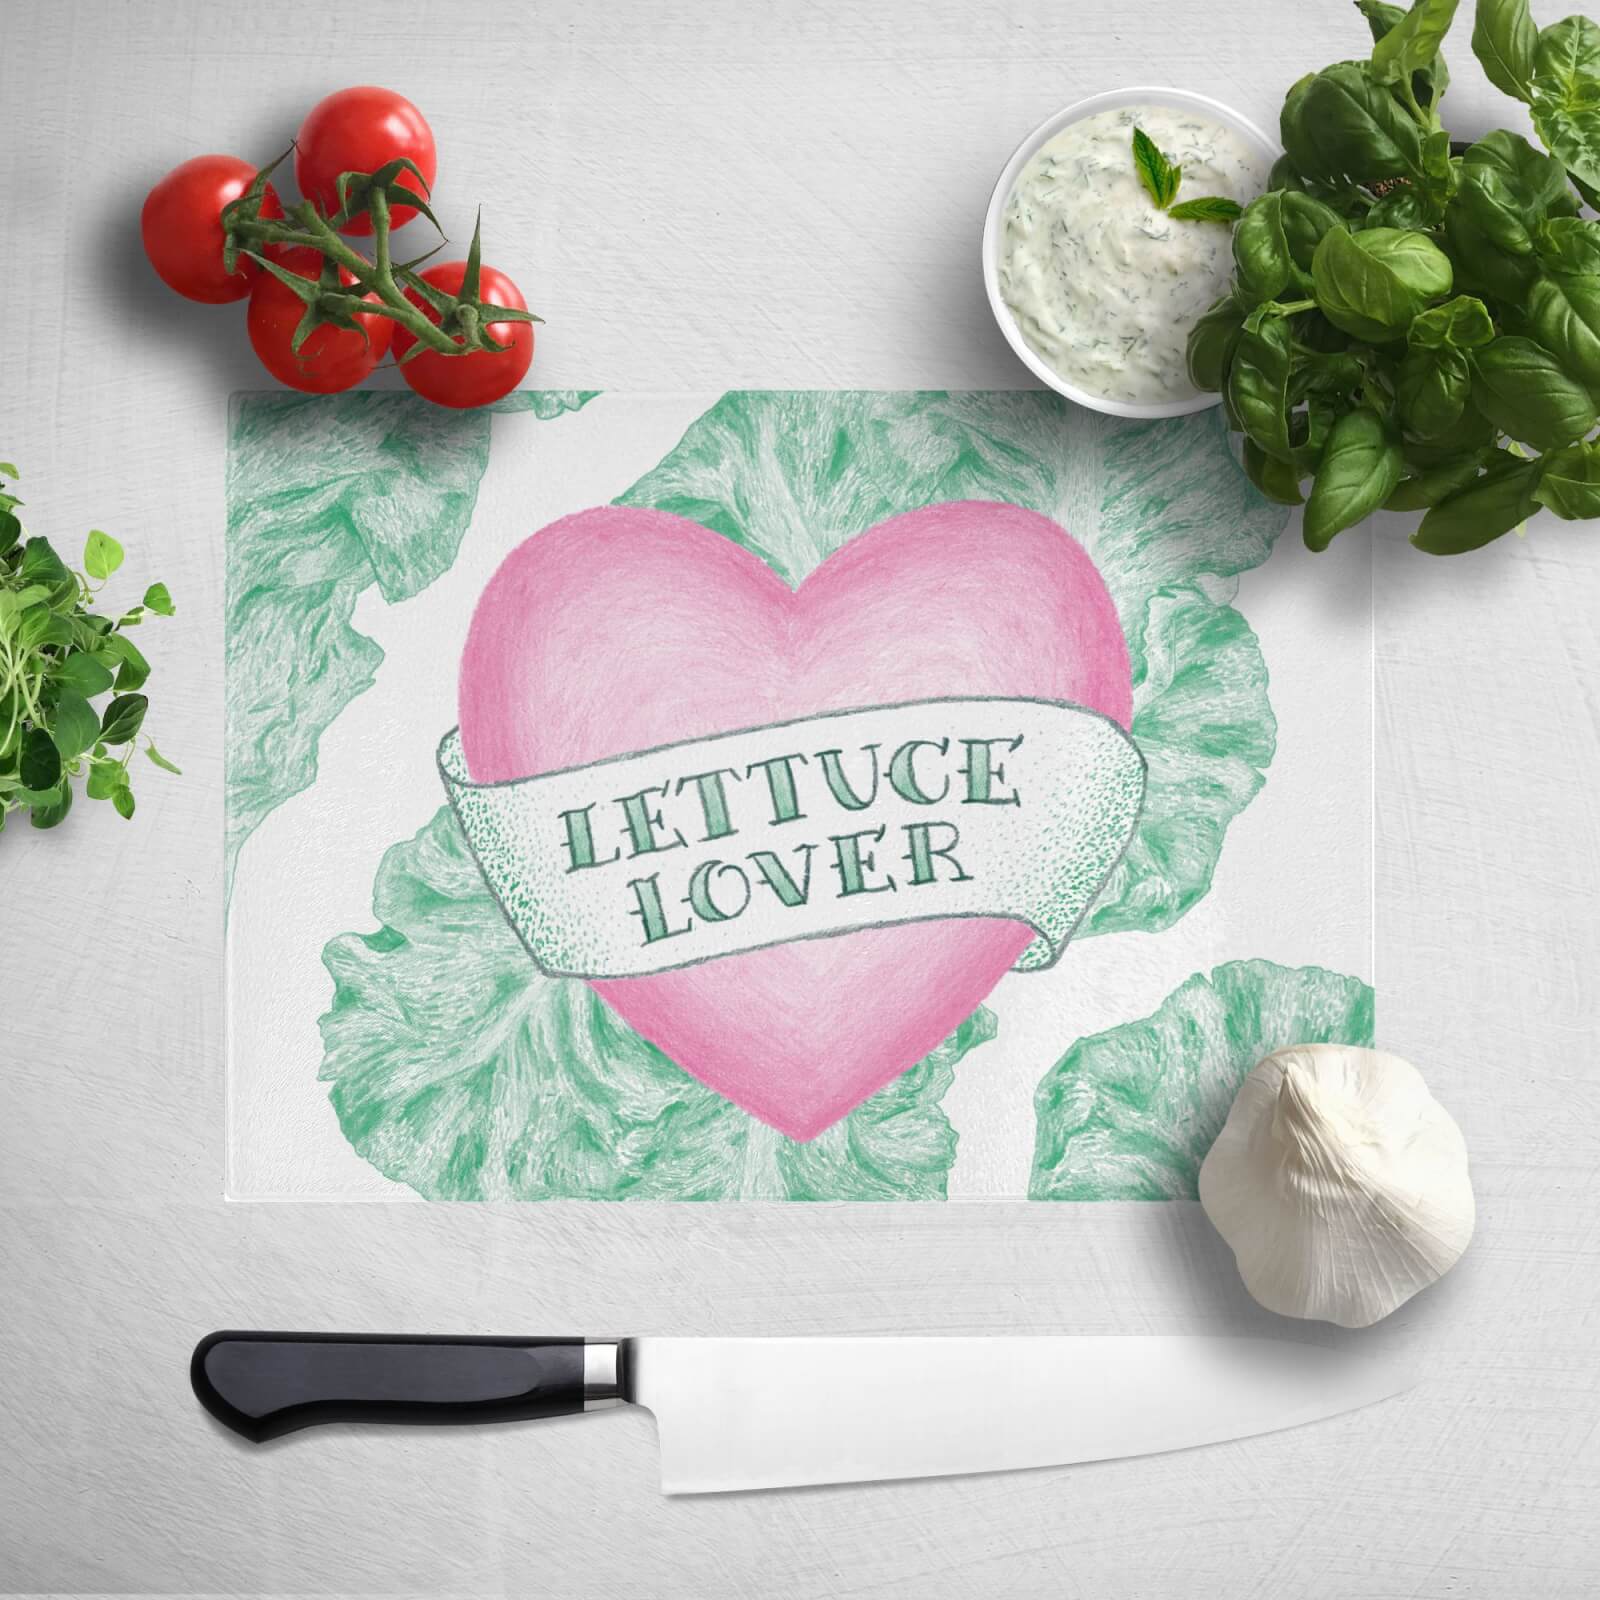 Lettuce Lover Chopping Board